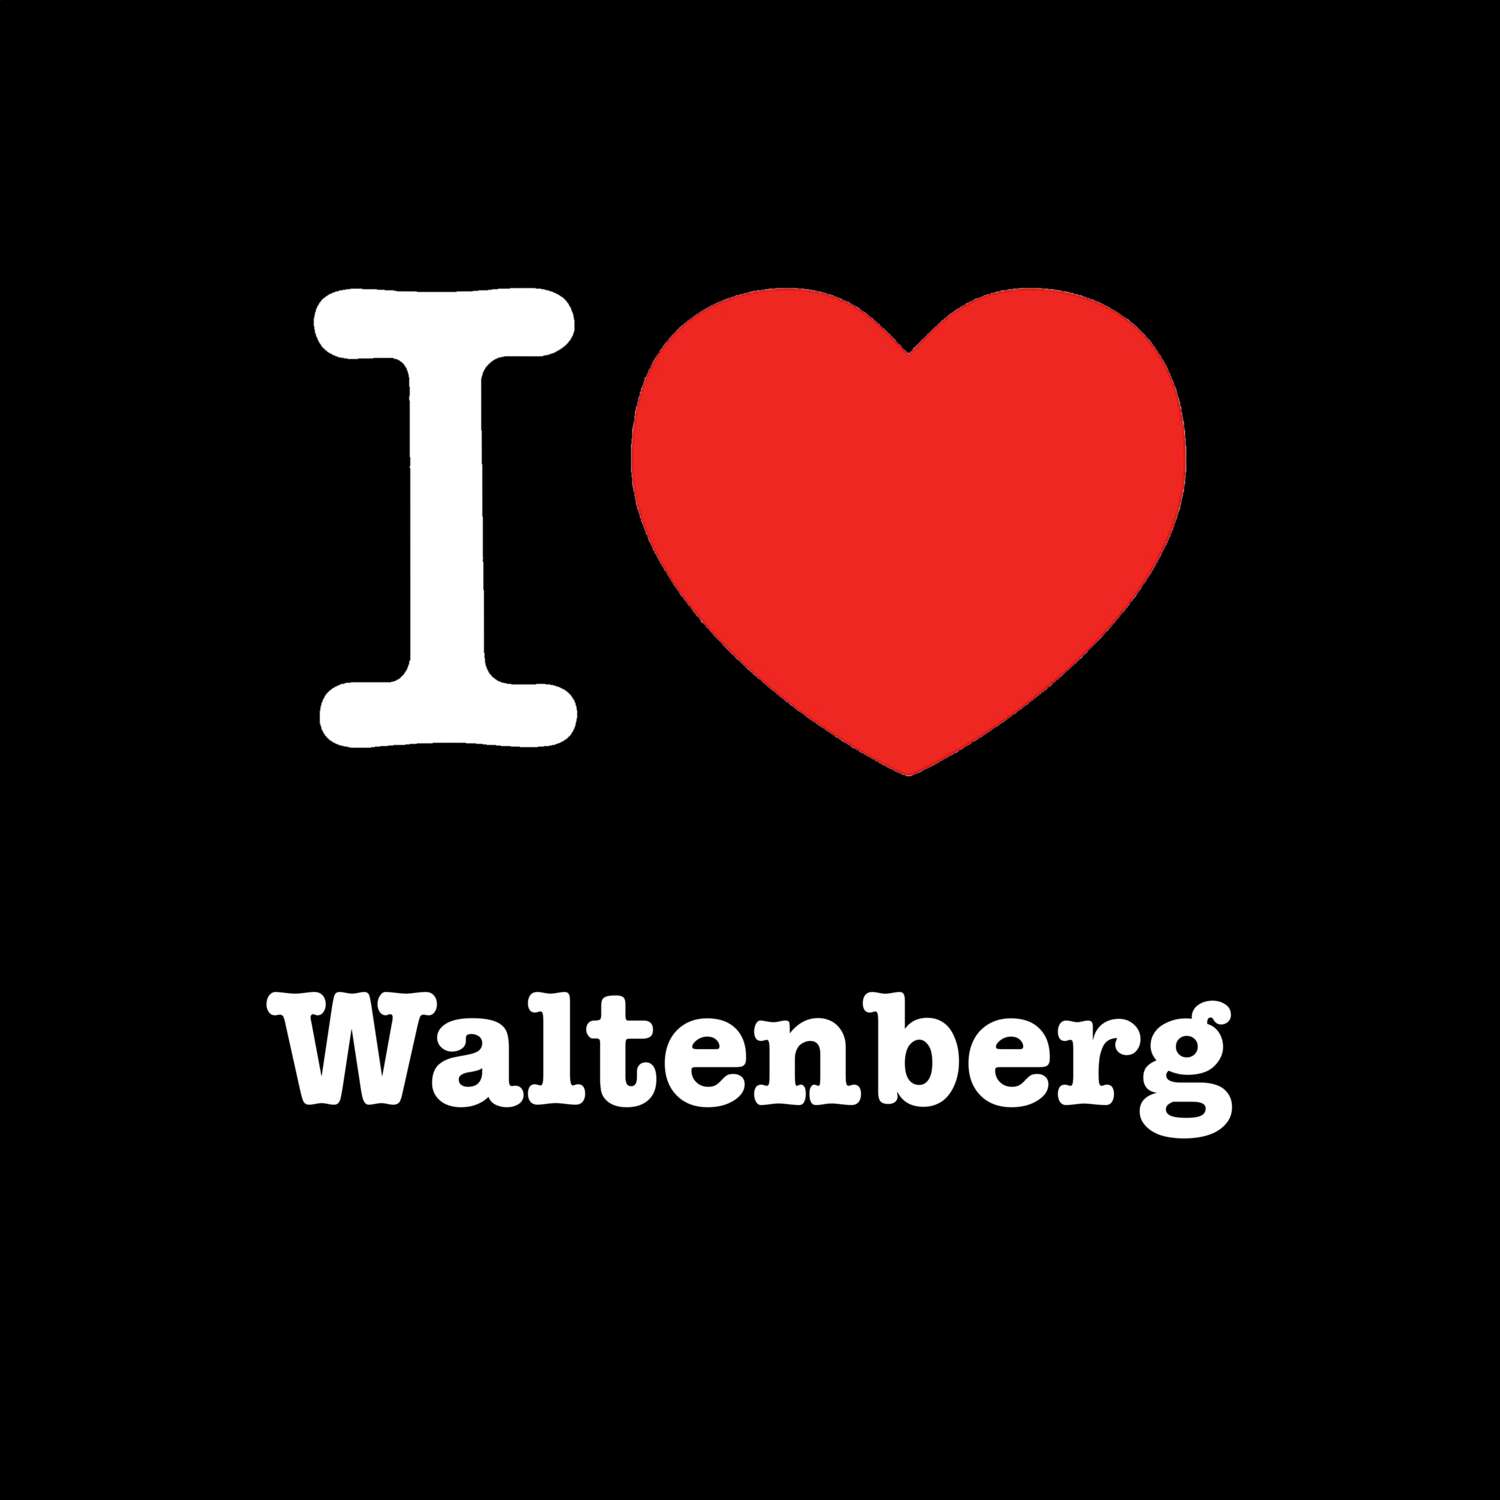 Waltenberg T-Shirt »I love«